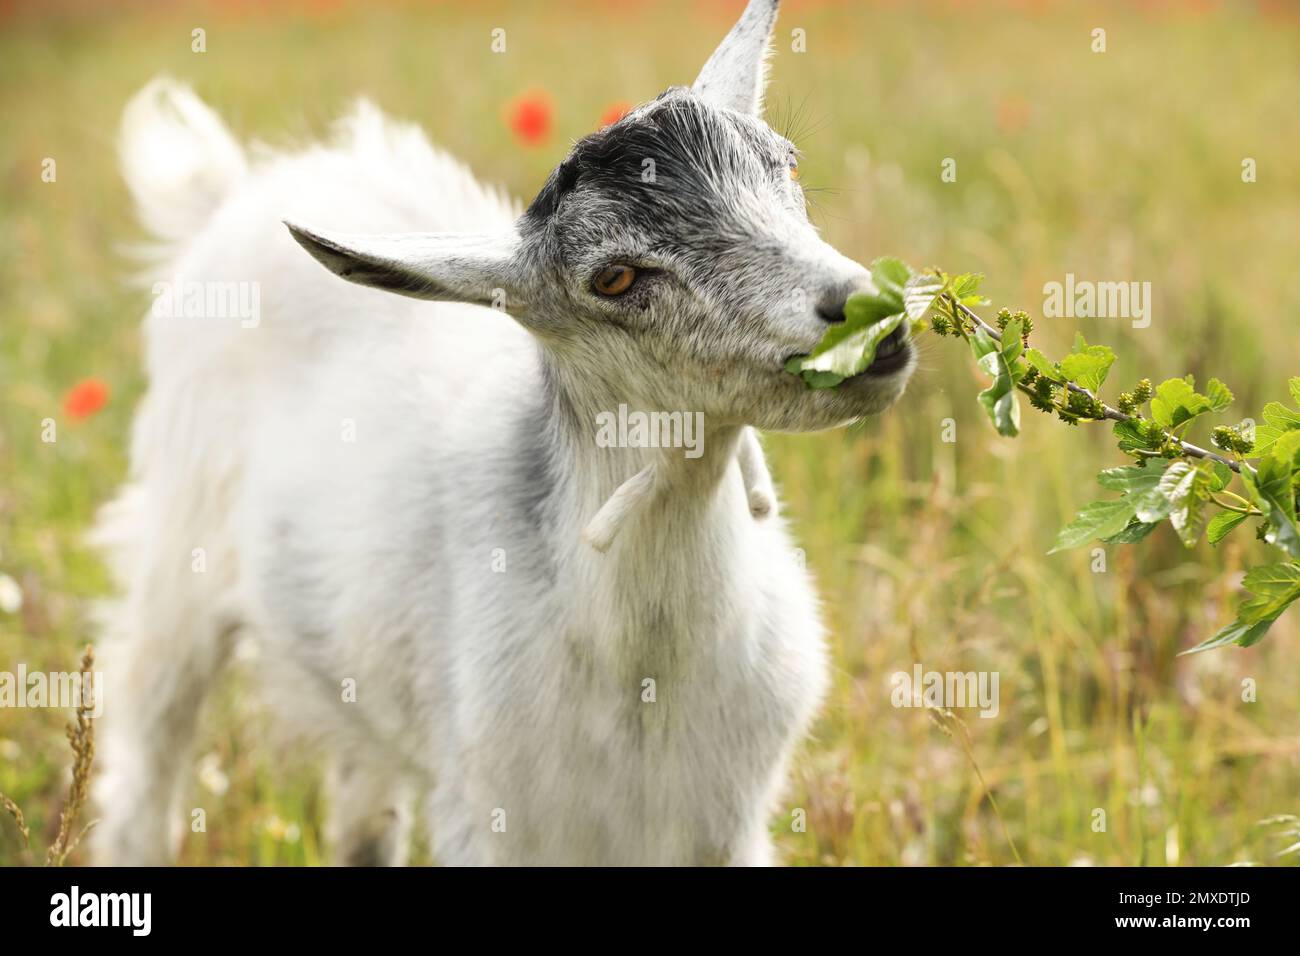 Cute grey goatling in field. Animal husbandry Stock Photo - Alamy